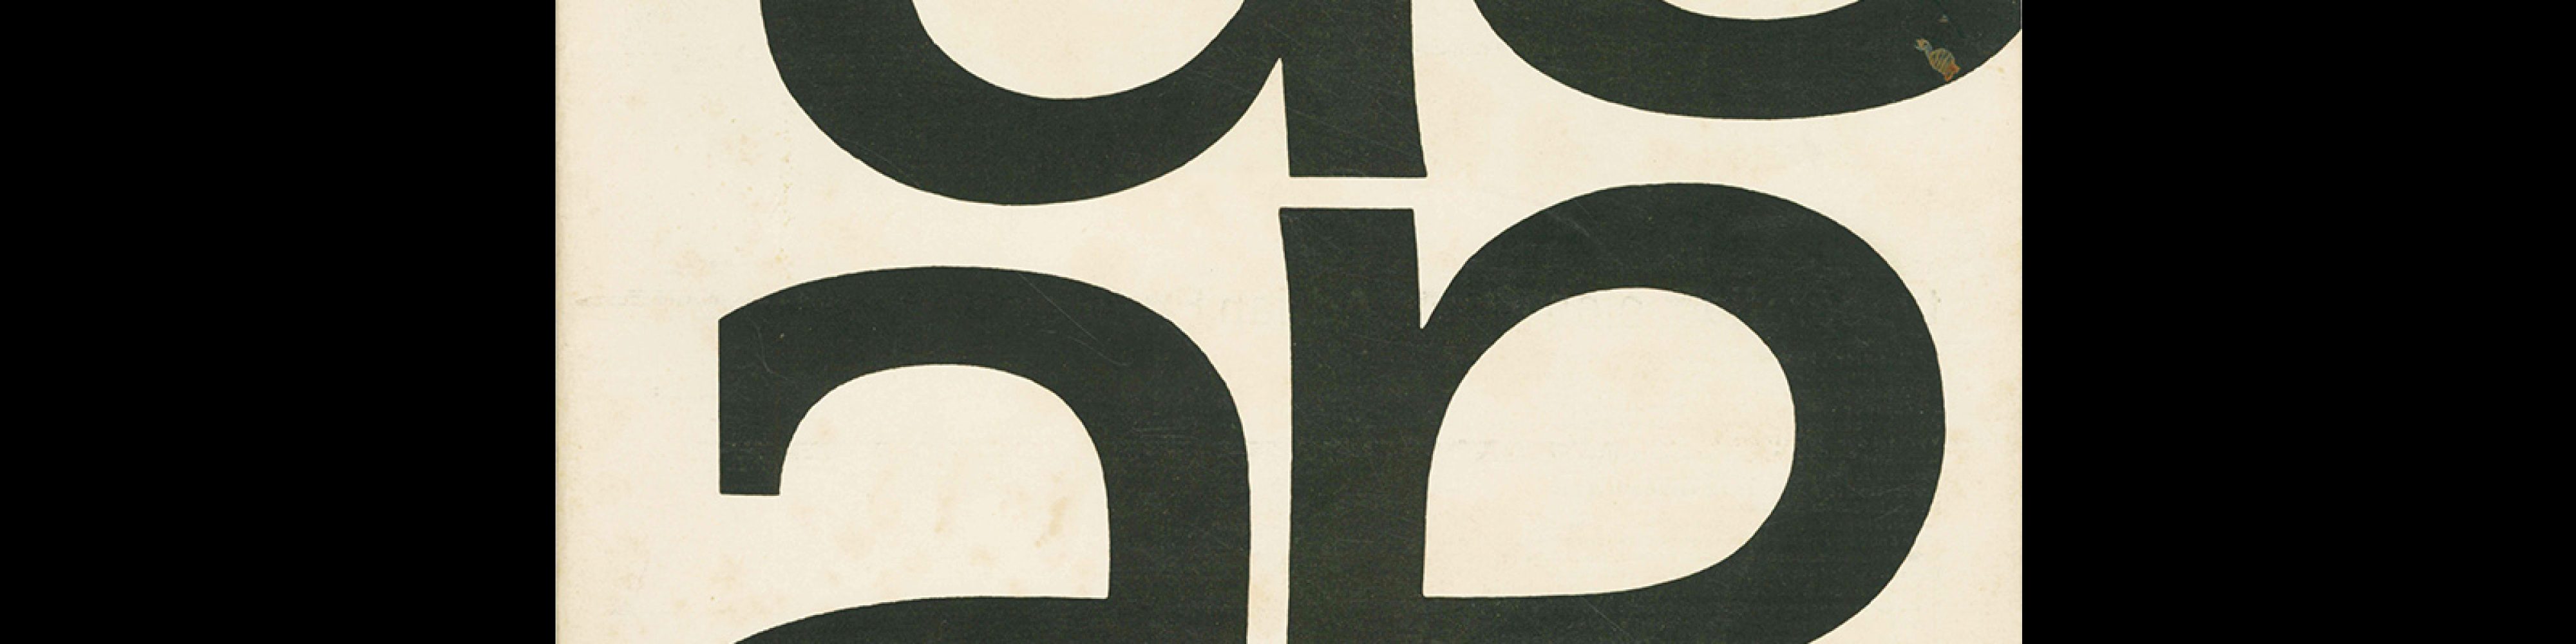 Typografia, ročník 68, 09, 1965. Cover design by Oldřich Hlavsa.